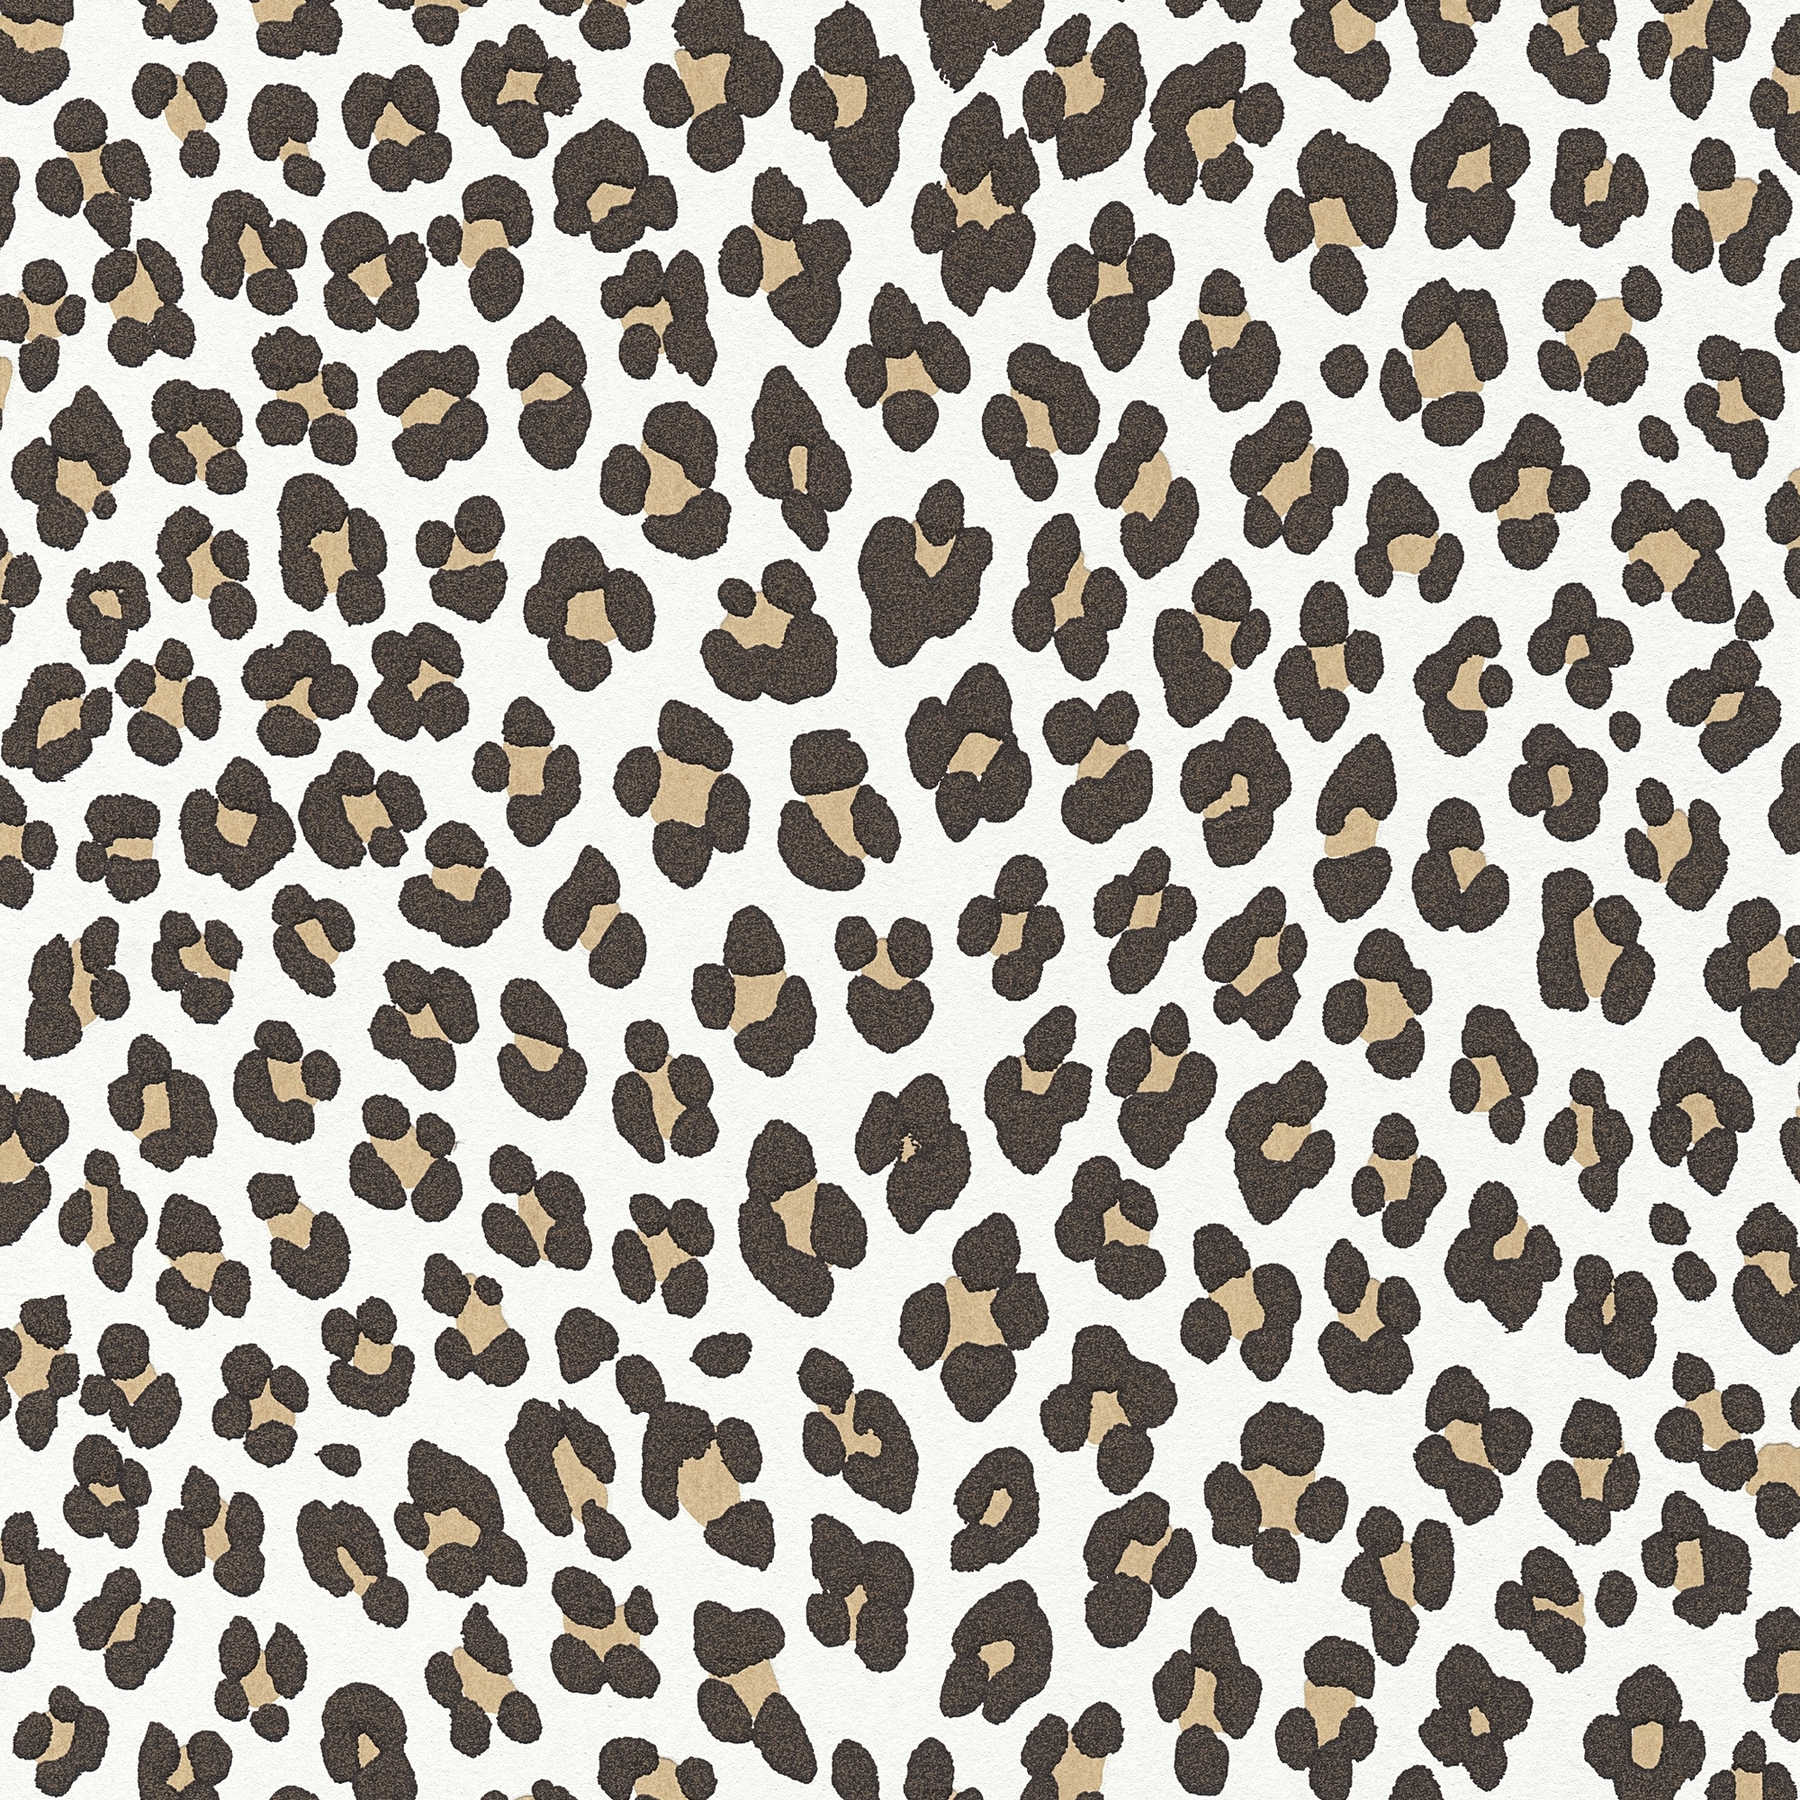         Animal Print Tapete mit Leoparden Muster – Braun, Metallic
    